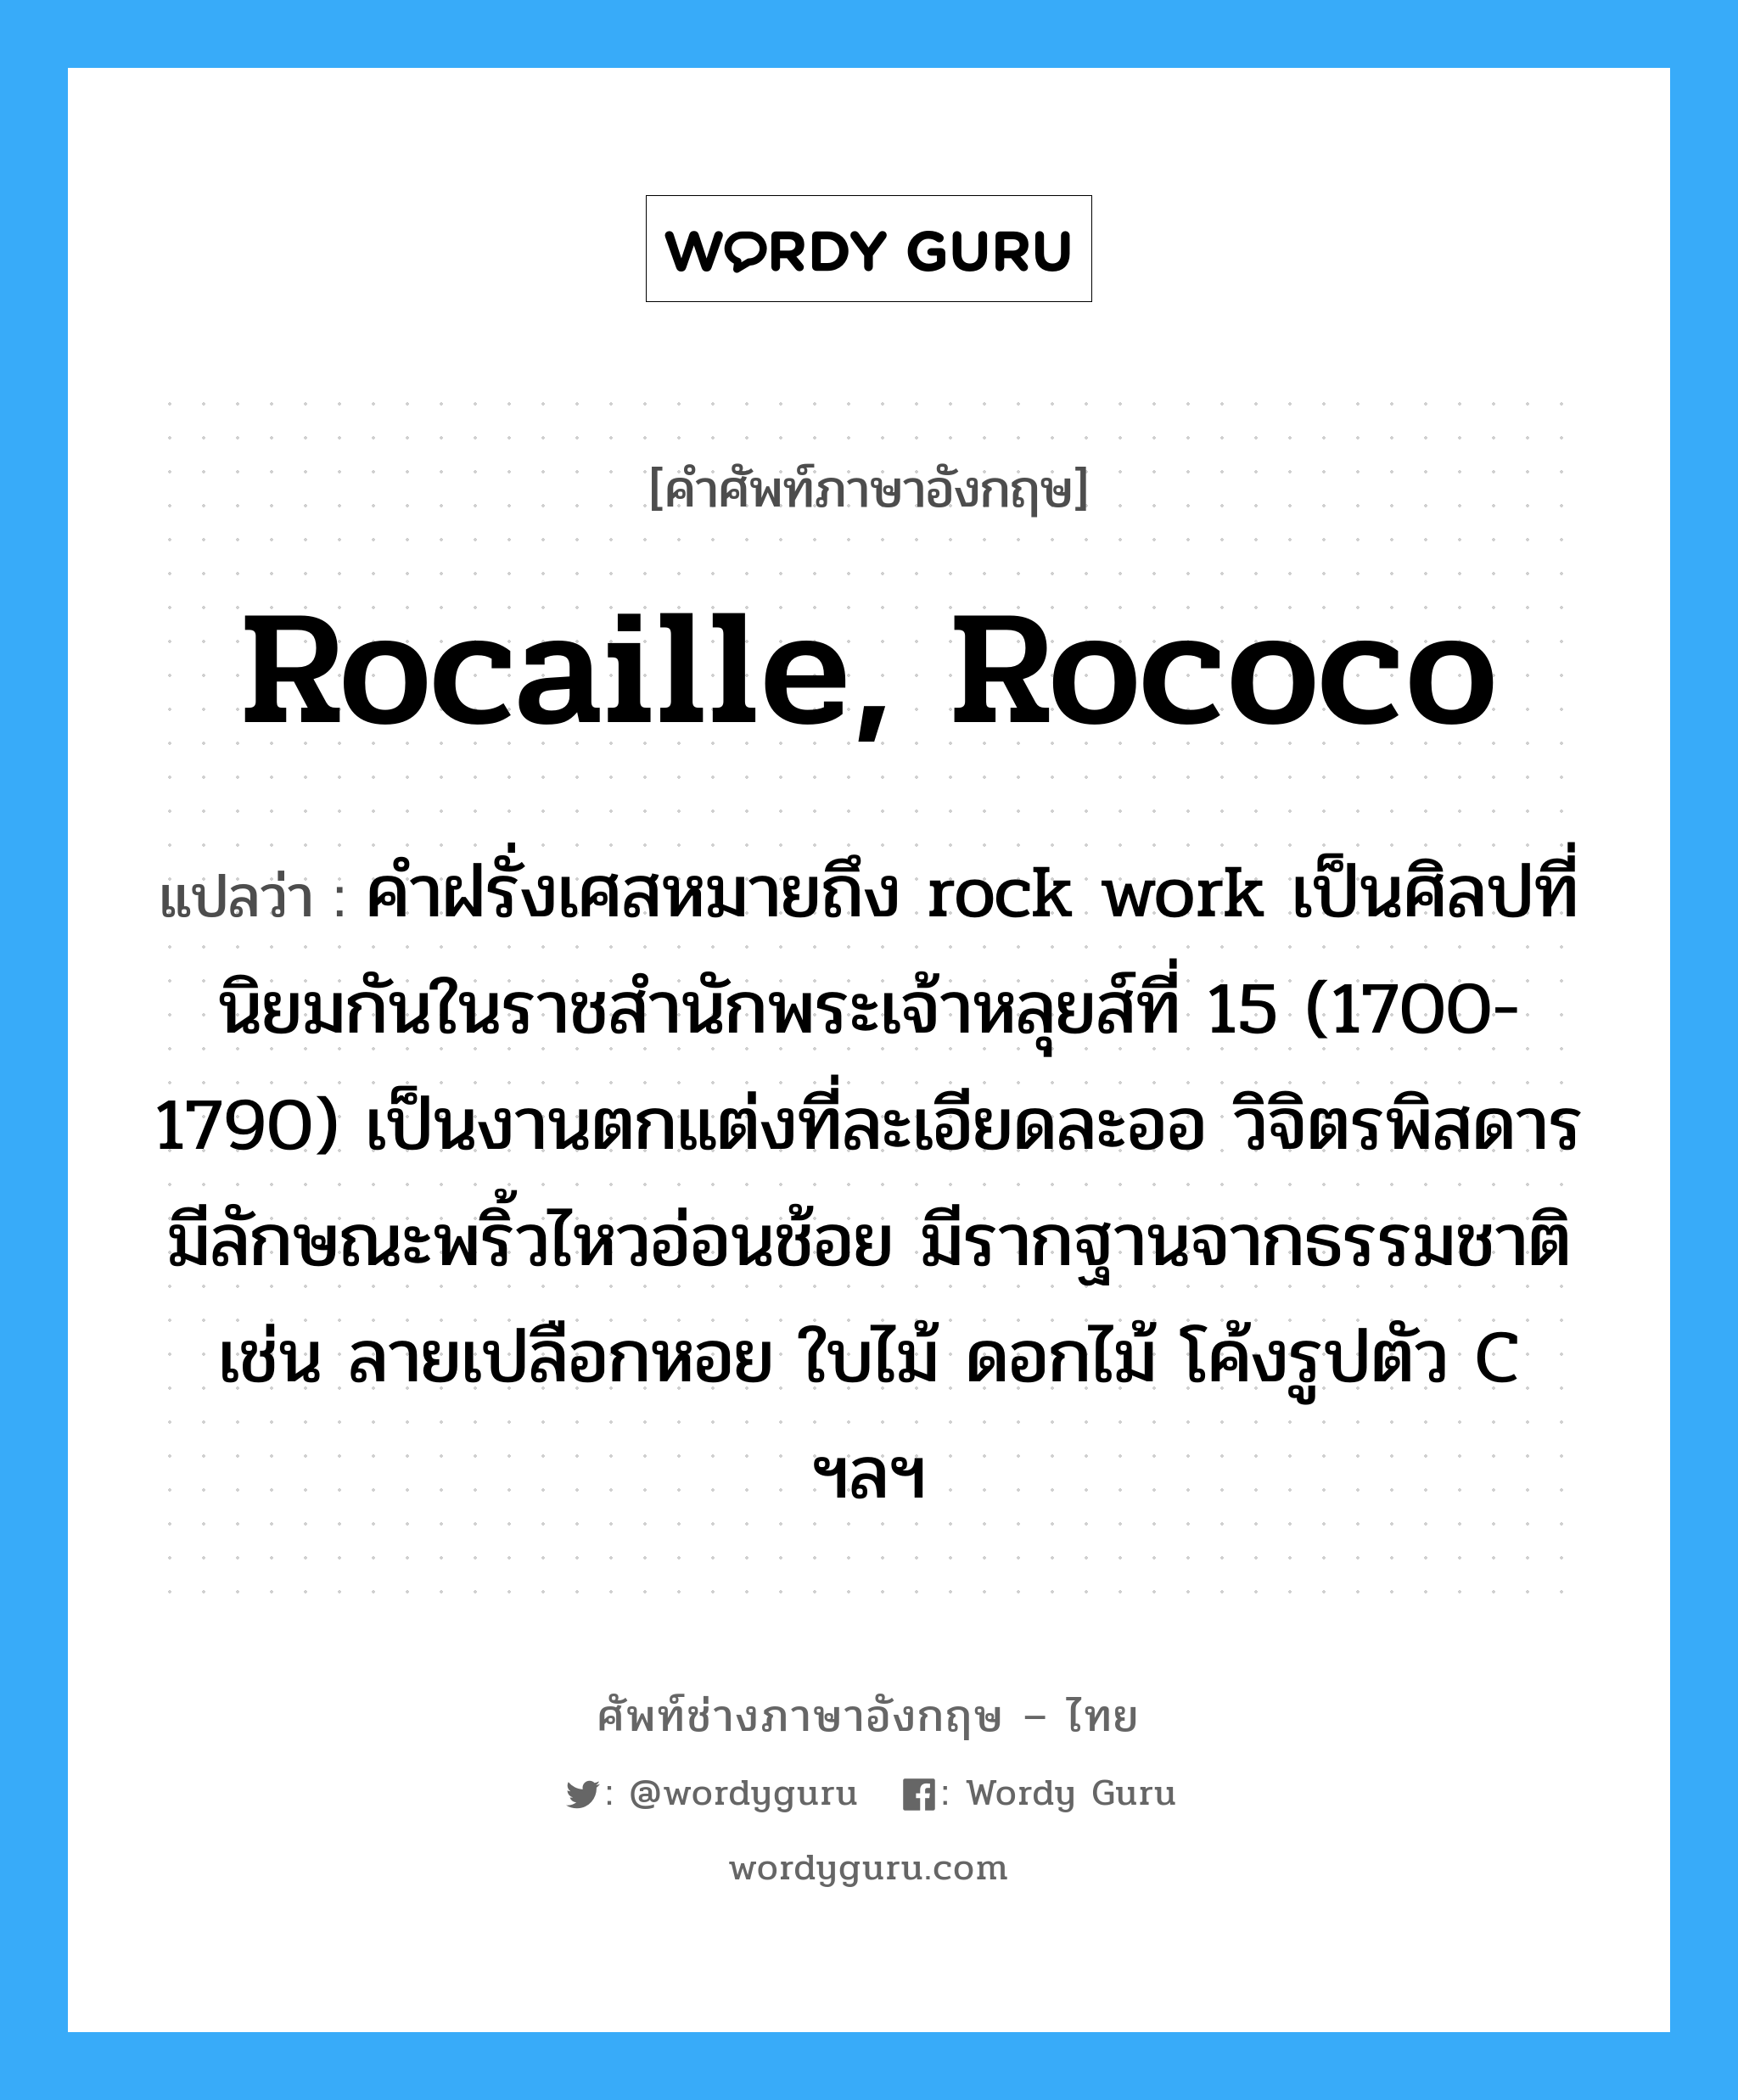 Rocaille, Rococo แปลว่า?, คำศัพท์ช่างภาษาอังกฤษ - ไทย Rocaille, Rococo คำศัพท์ภาษาอังกฤษ Rocaille, Rococo แปลว่า คำฝรั่งเศสหมายถึง rock work เป็นศิลปที่นิยมกันในราชสำนักพระเจ้าหลุยส์ที่ 15 (1700-1790) เป็นงานตกแต่งที่ละเอียดละออ วิจิตรพิสดาร มีลักษณะพริ้วไหวอ่อนช้อย มีรากฐานจากธรรมชาติ เช่น ลายเปลือกหอย ใบไม้ ดอกไม้ โค้งรูปตัว C ฯลฯ